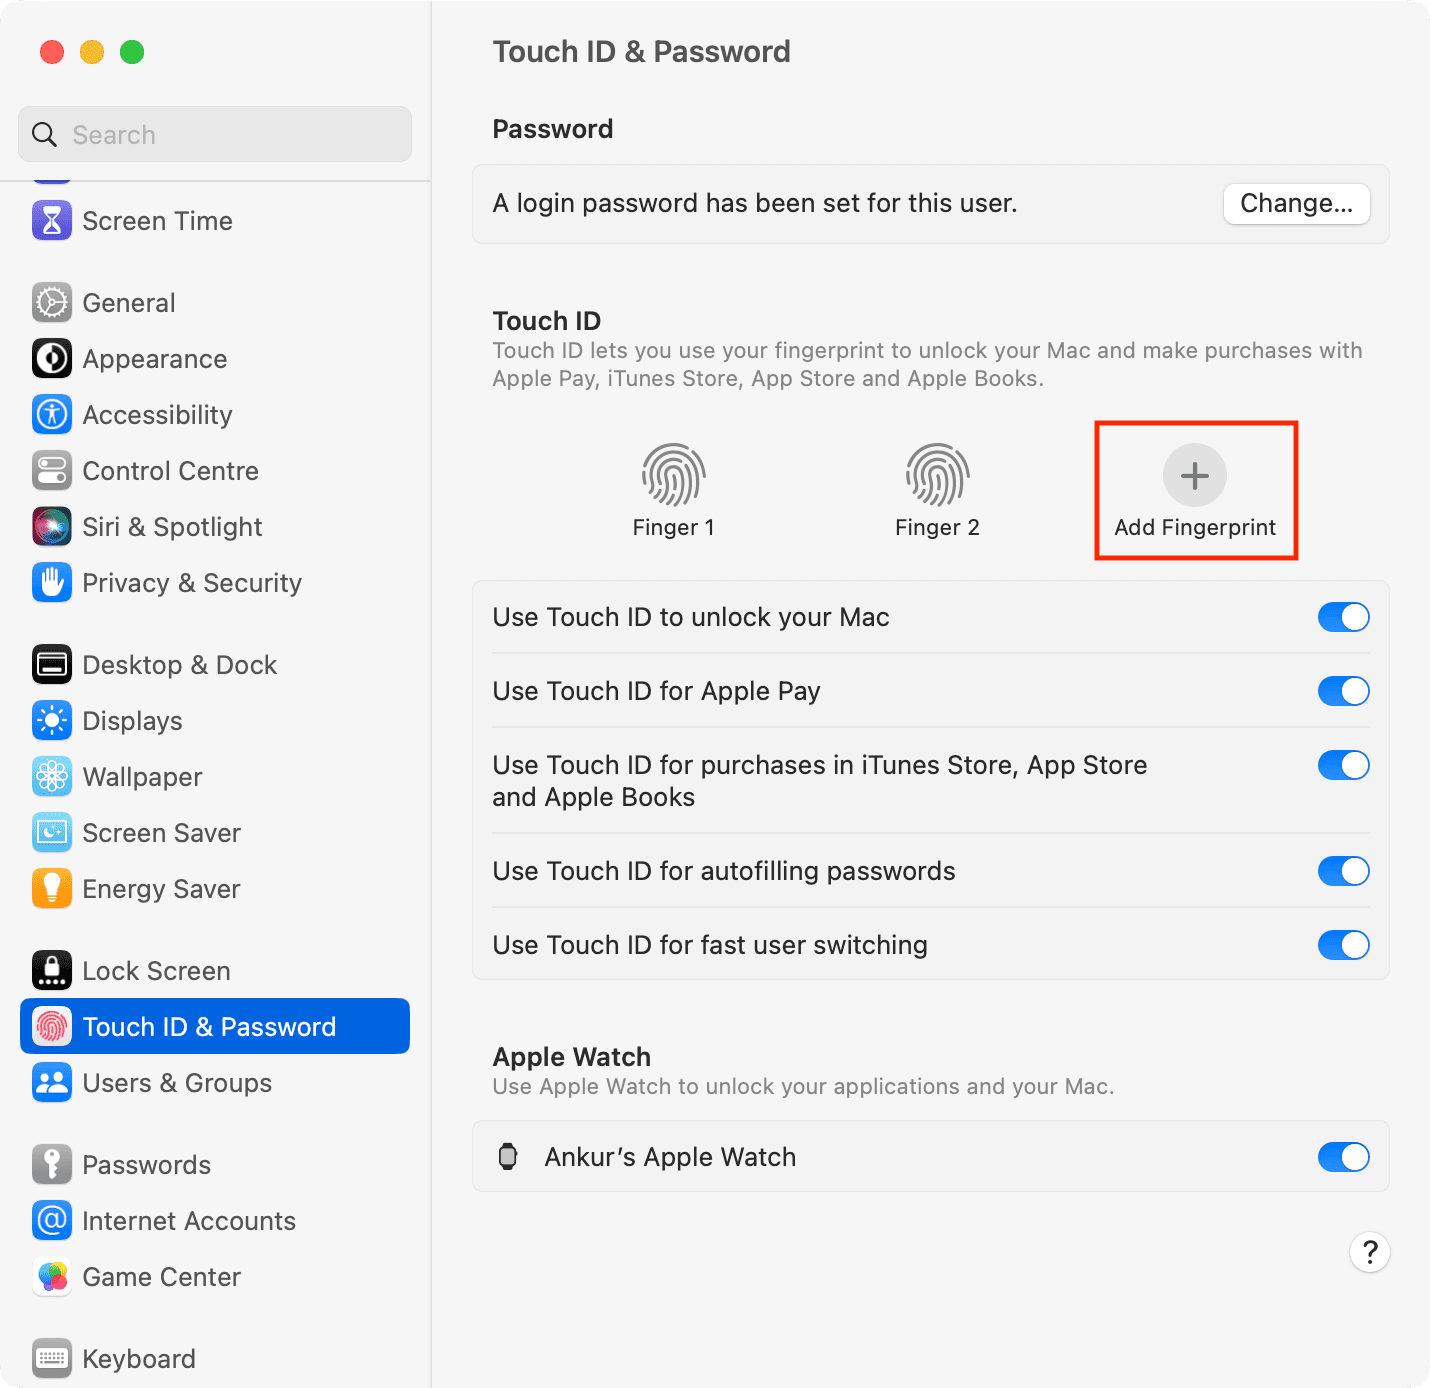 Add fingerprint to Touch ID on Mac